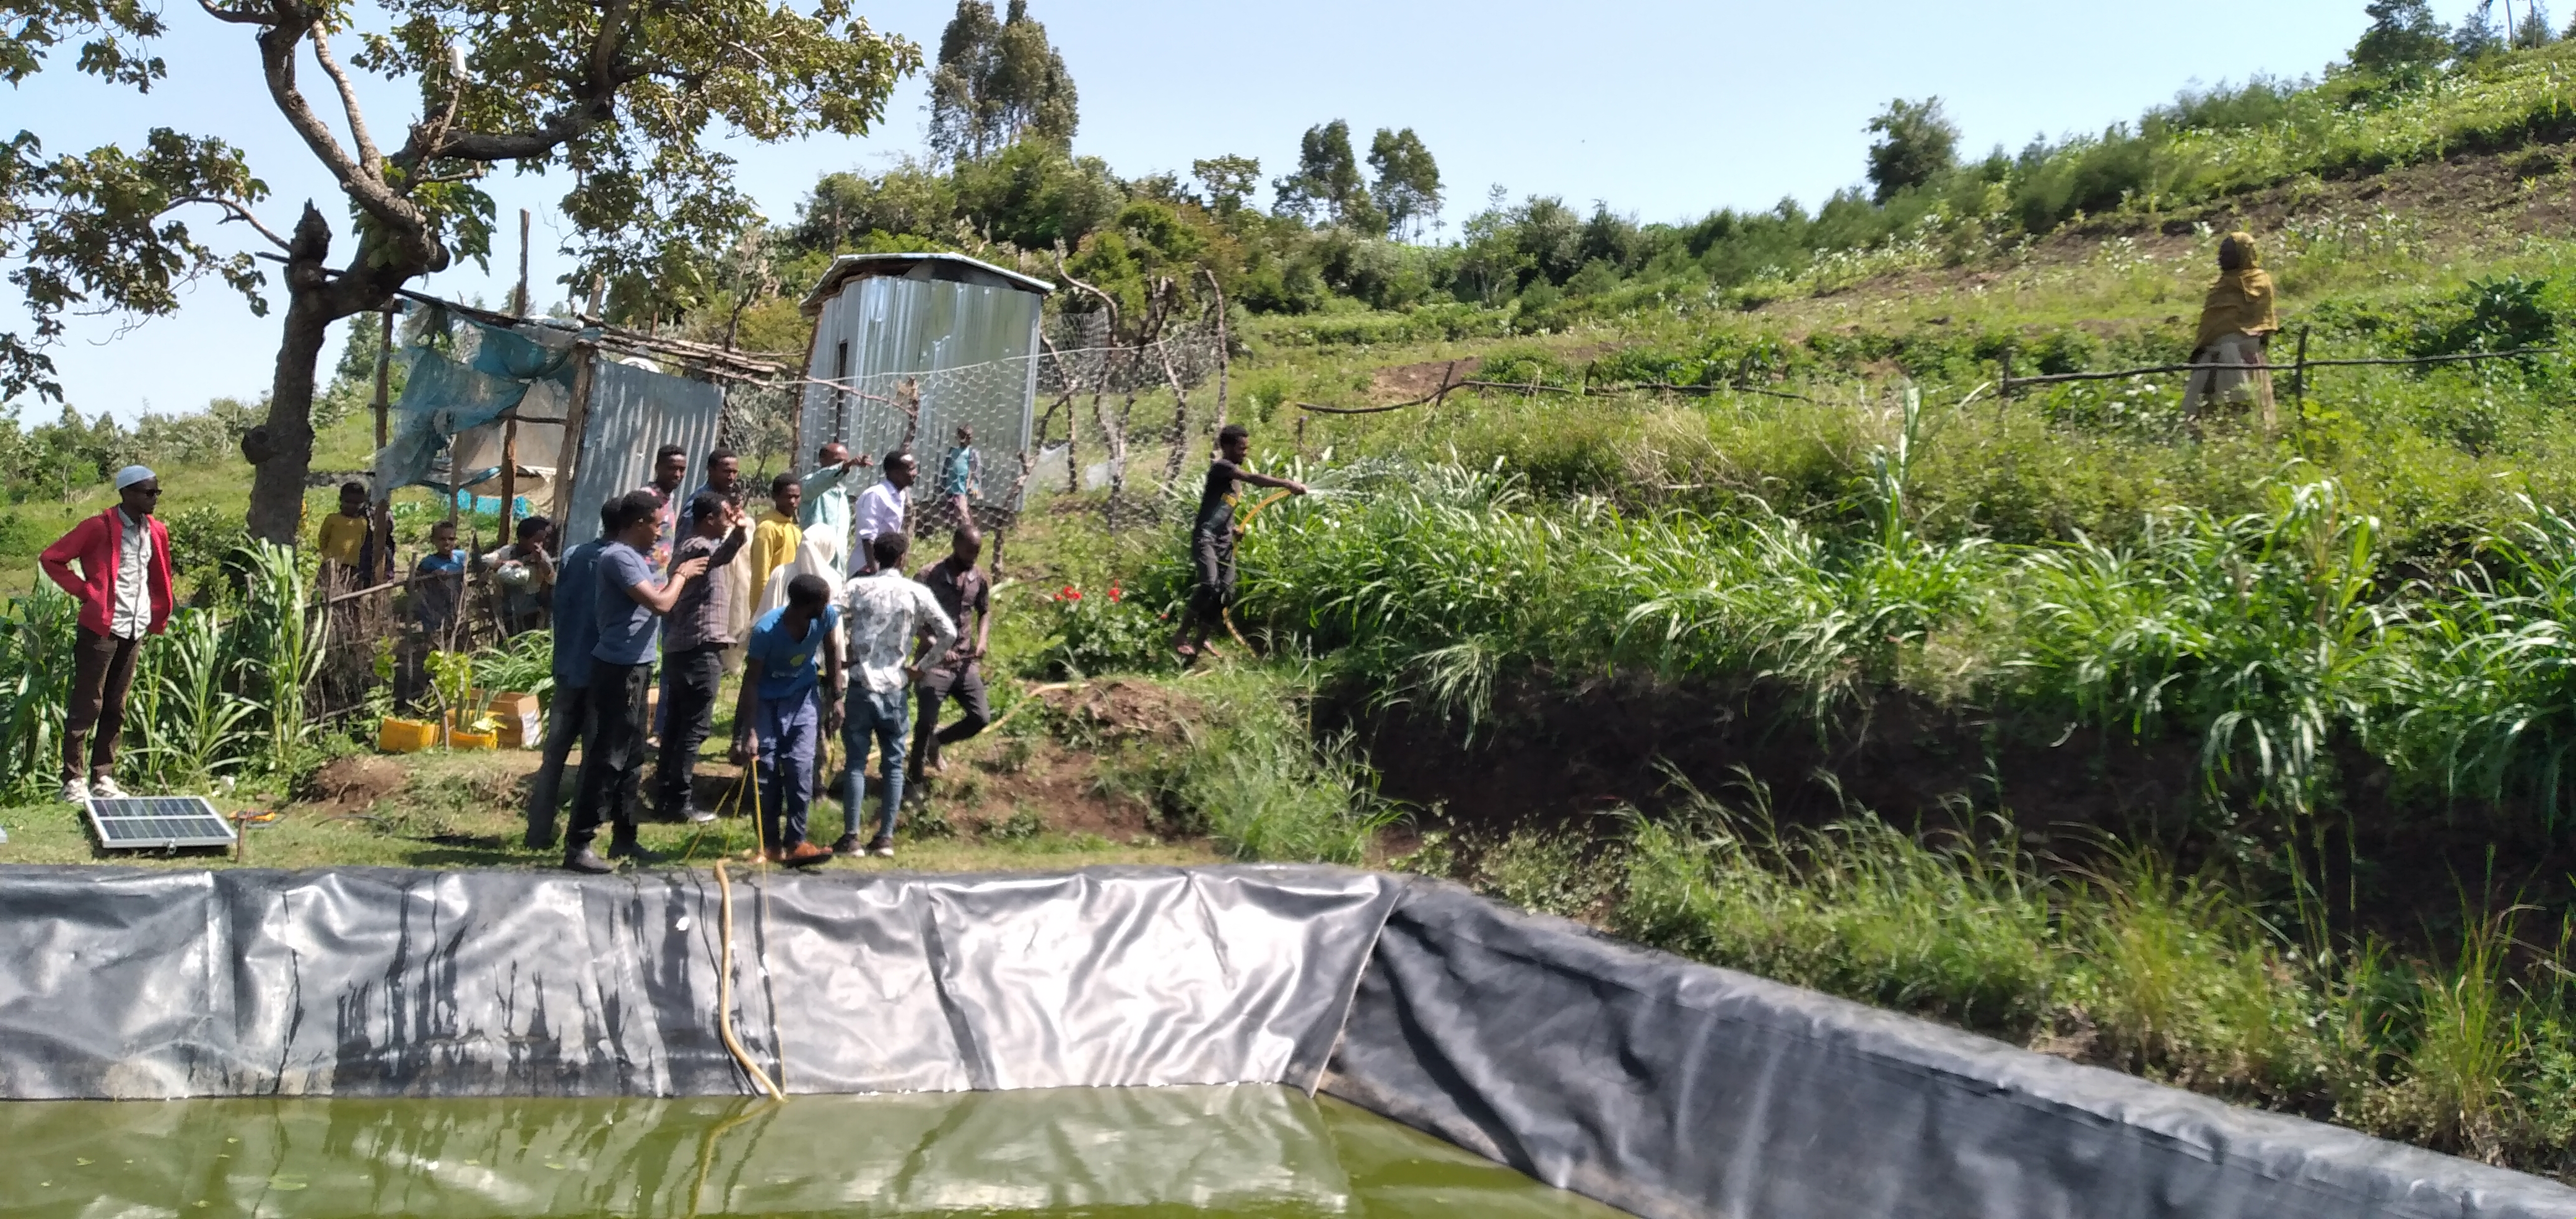 Visitors at Aliyi Mohammed’s farm. Credit: Chali Keneni, Project Coordinator for Doba District, Ethiopia